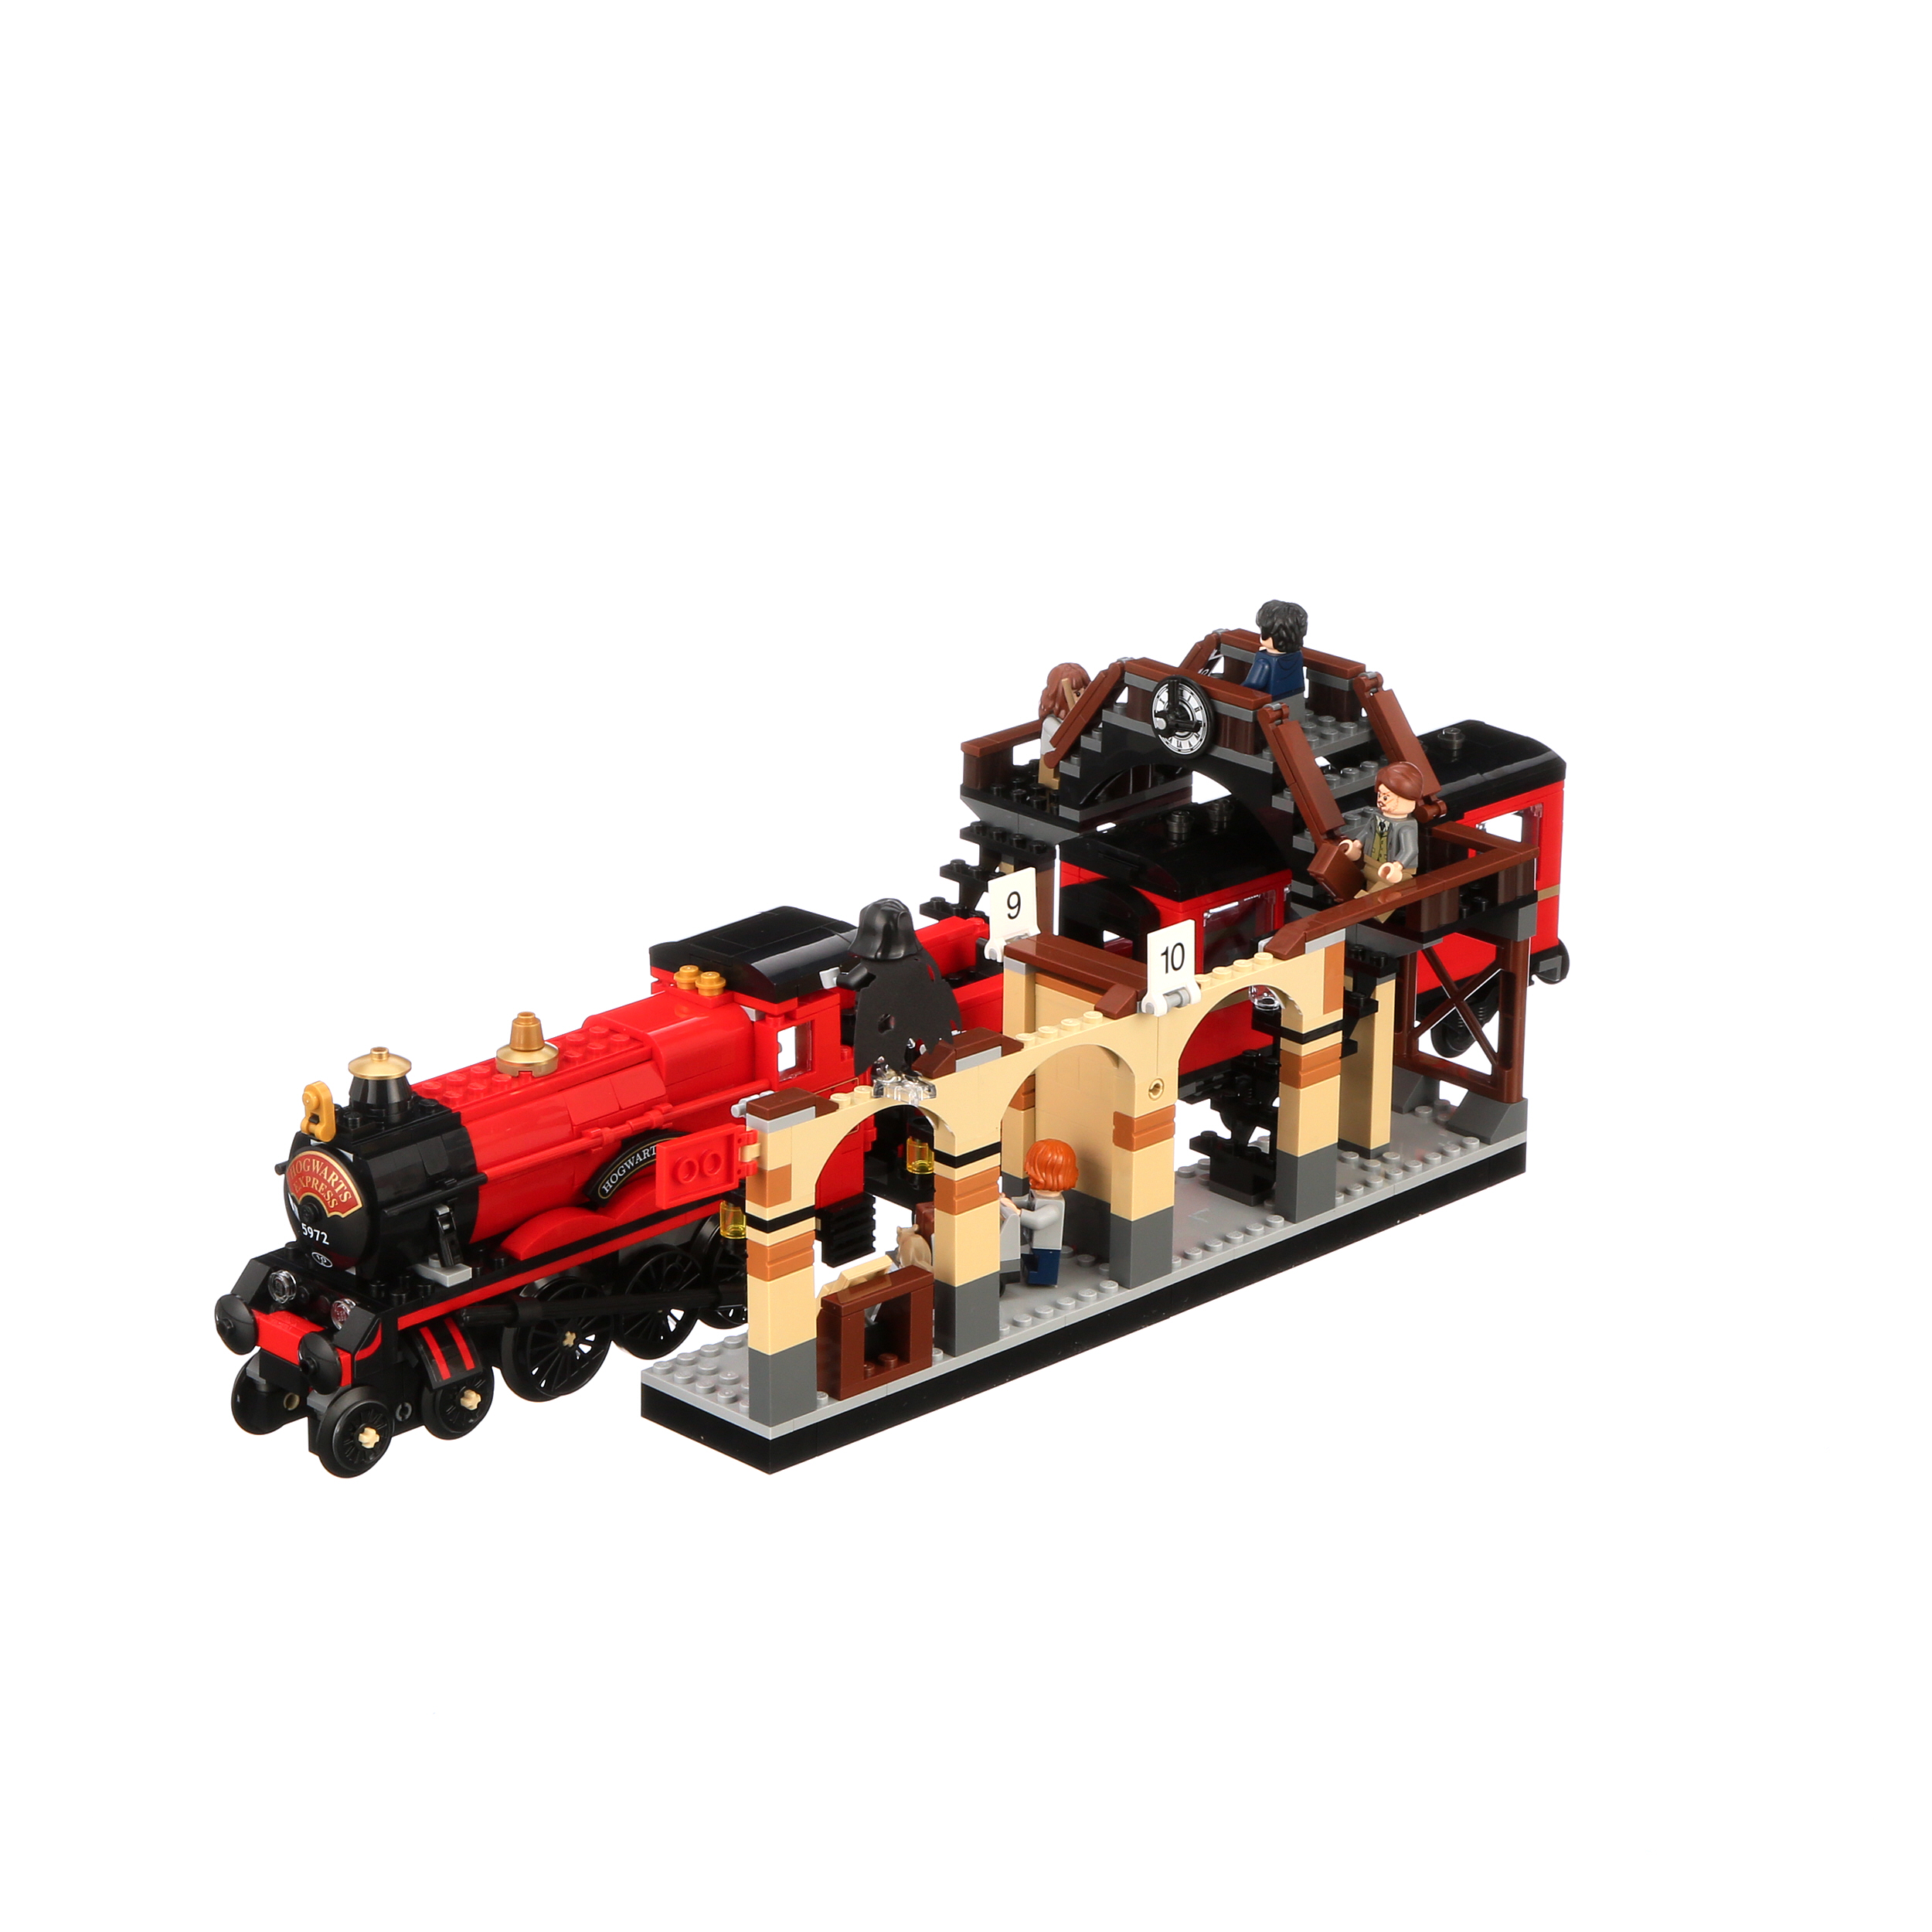 LEGO Harry Potter Hogwarts Express 75955 Toy Model Train Building